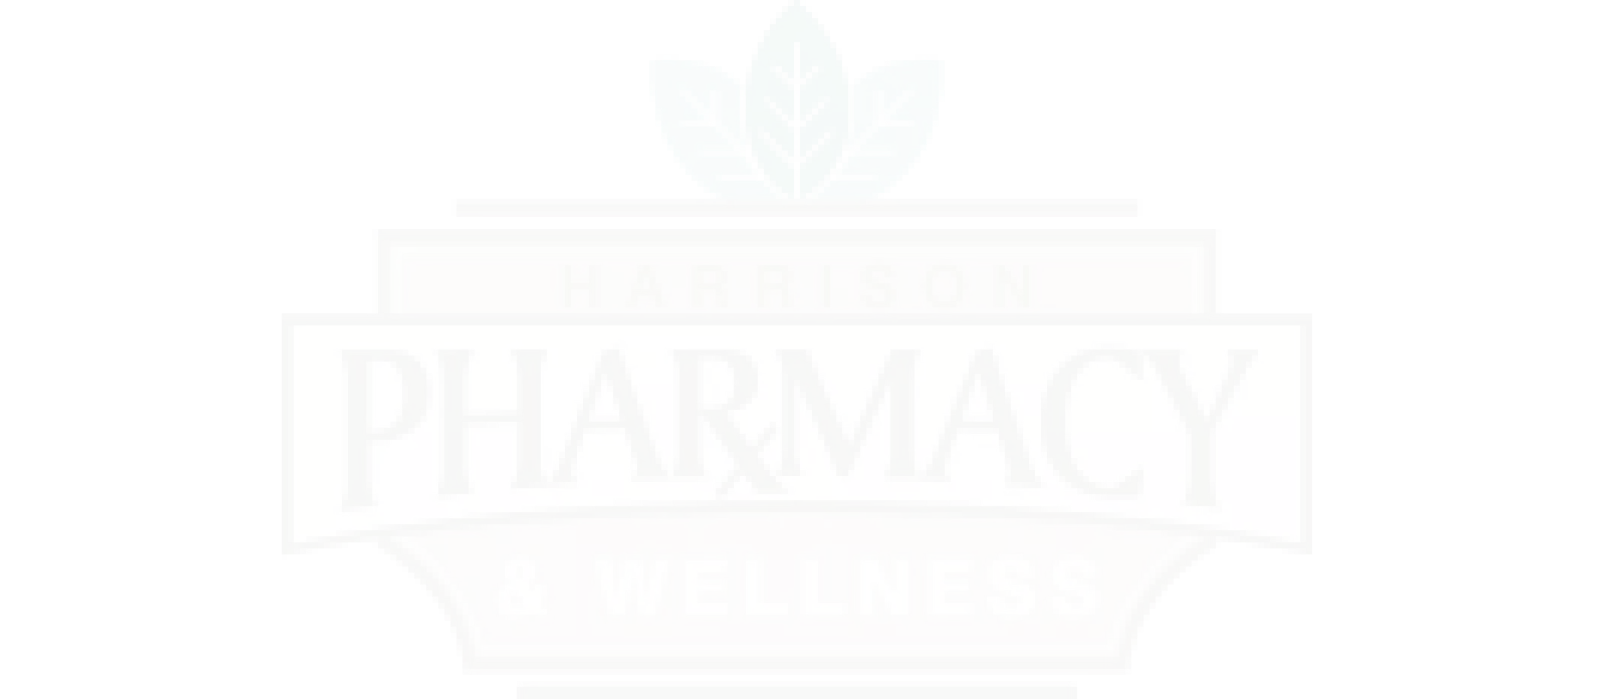 Harrison Pharmacy & Wellness in Ohio